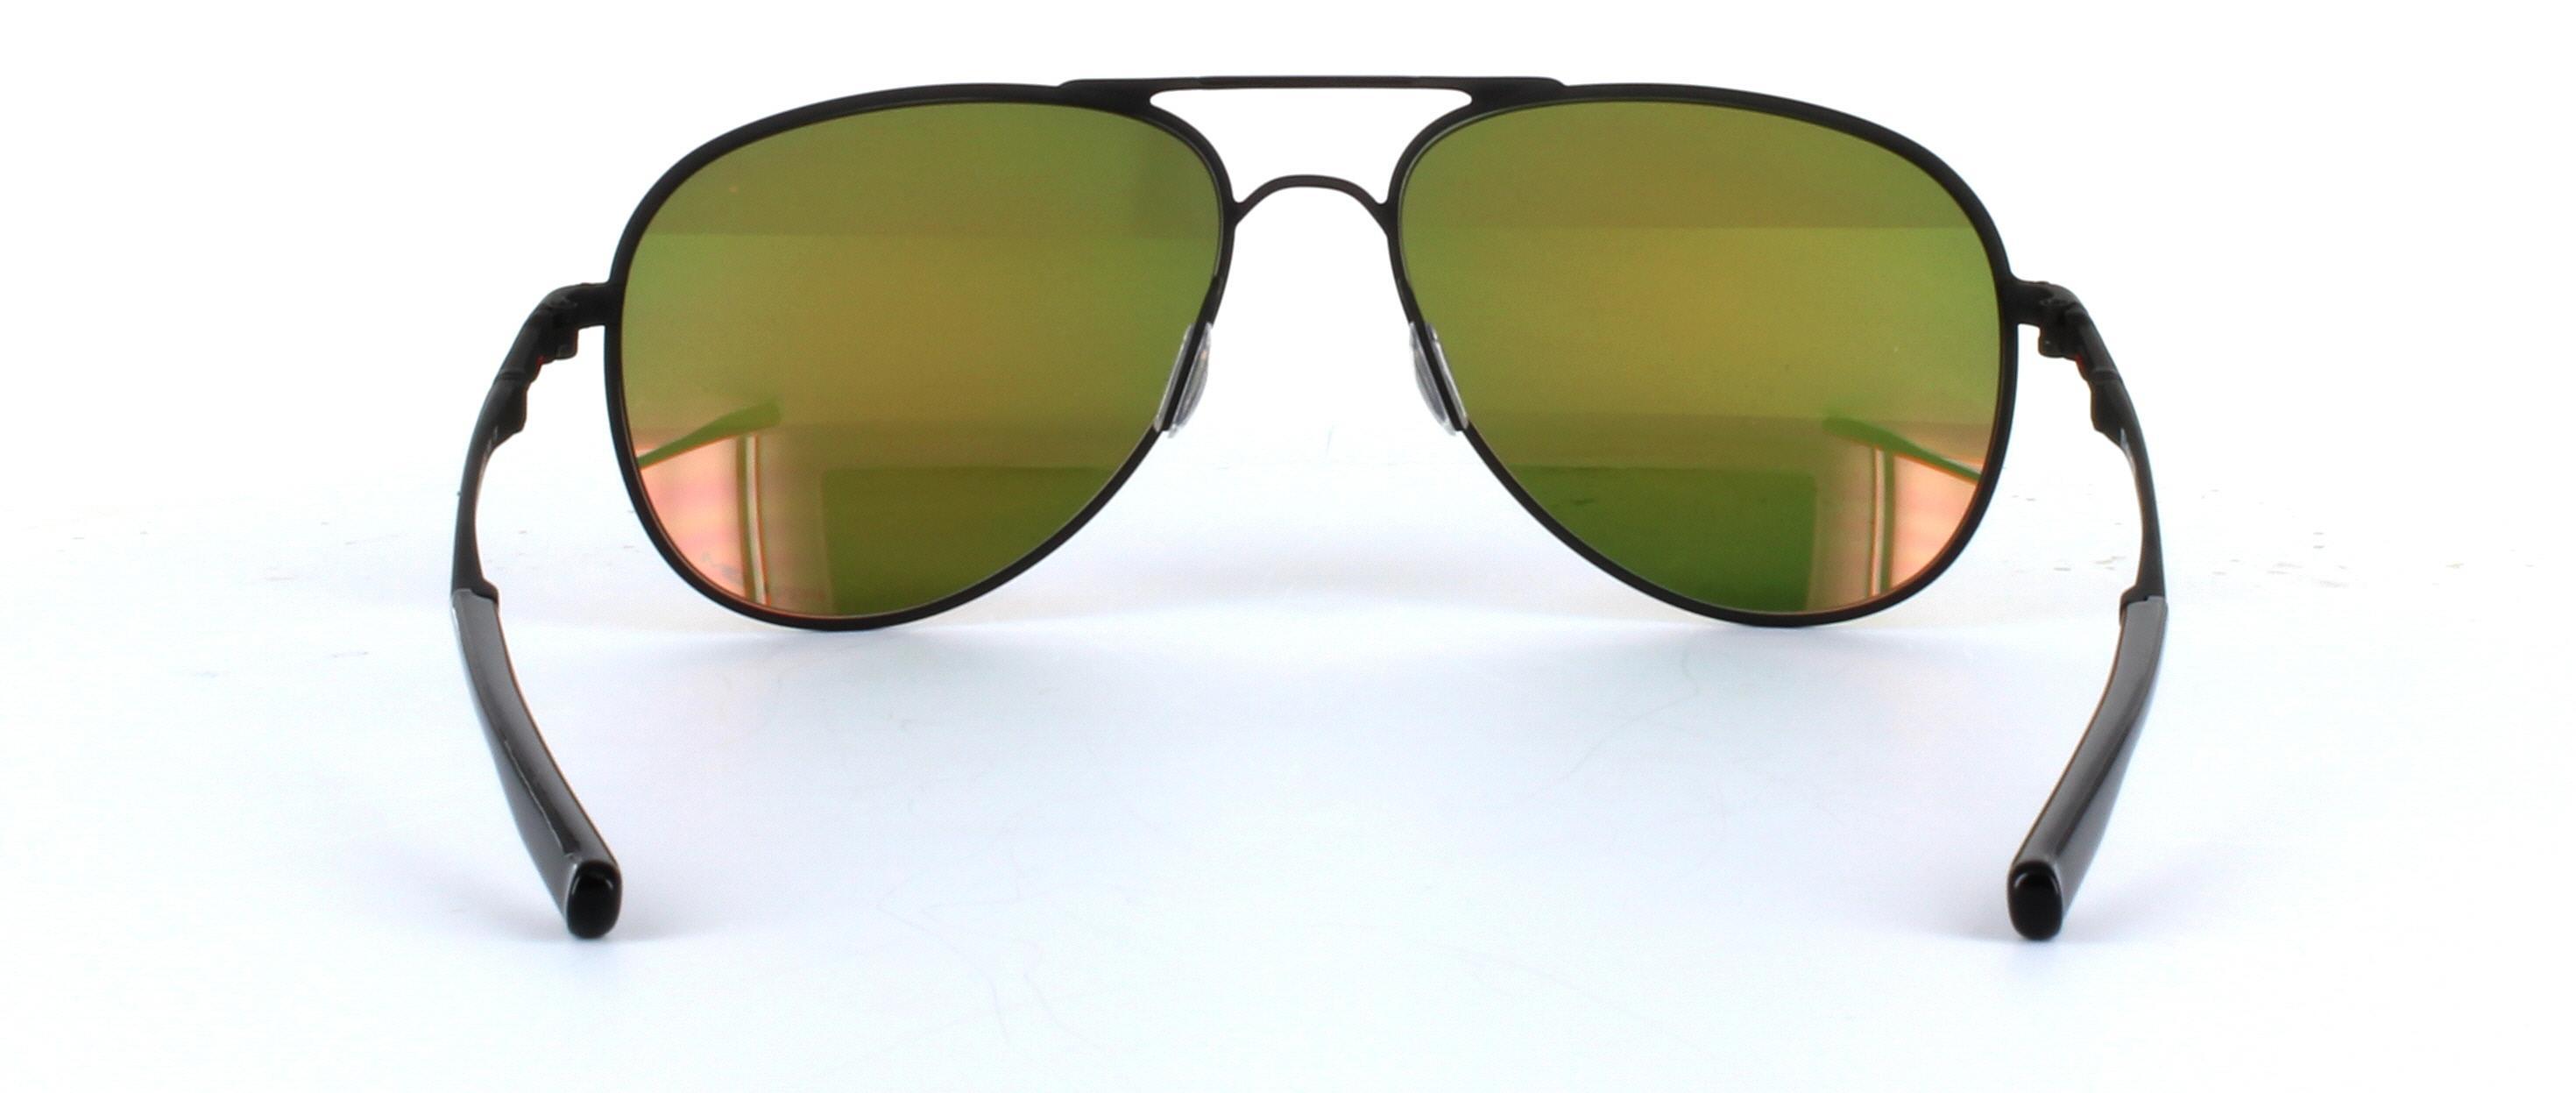 Oakley Elmont Black Full Rim Aviator Metal Prescription Sunglasses - Image View 3